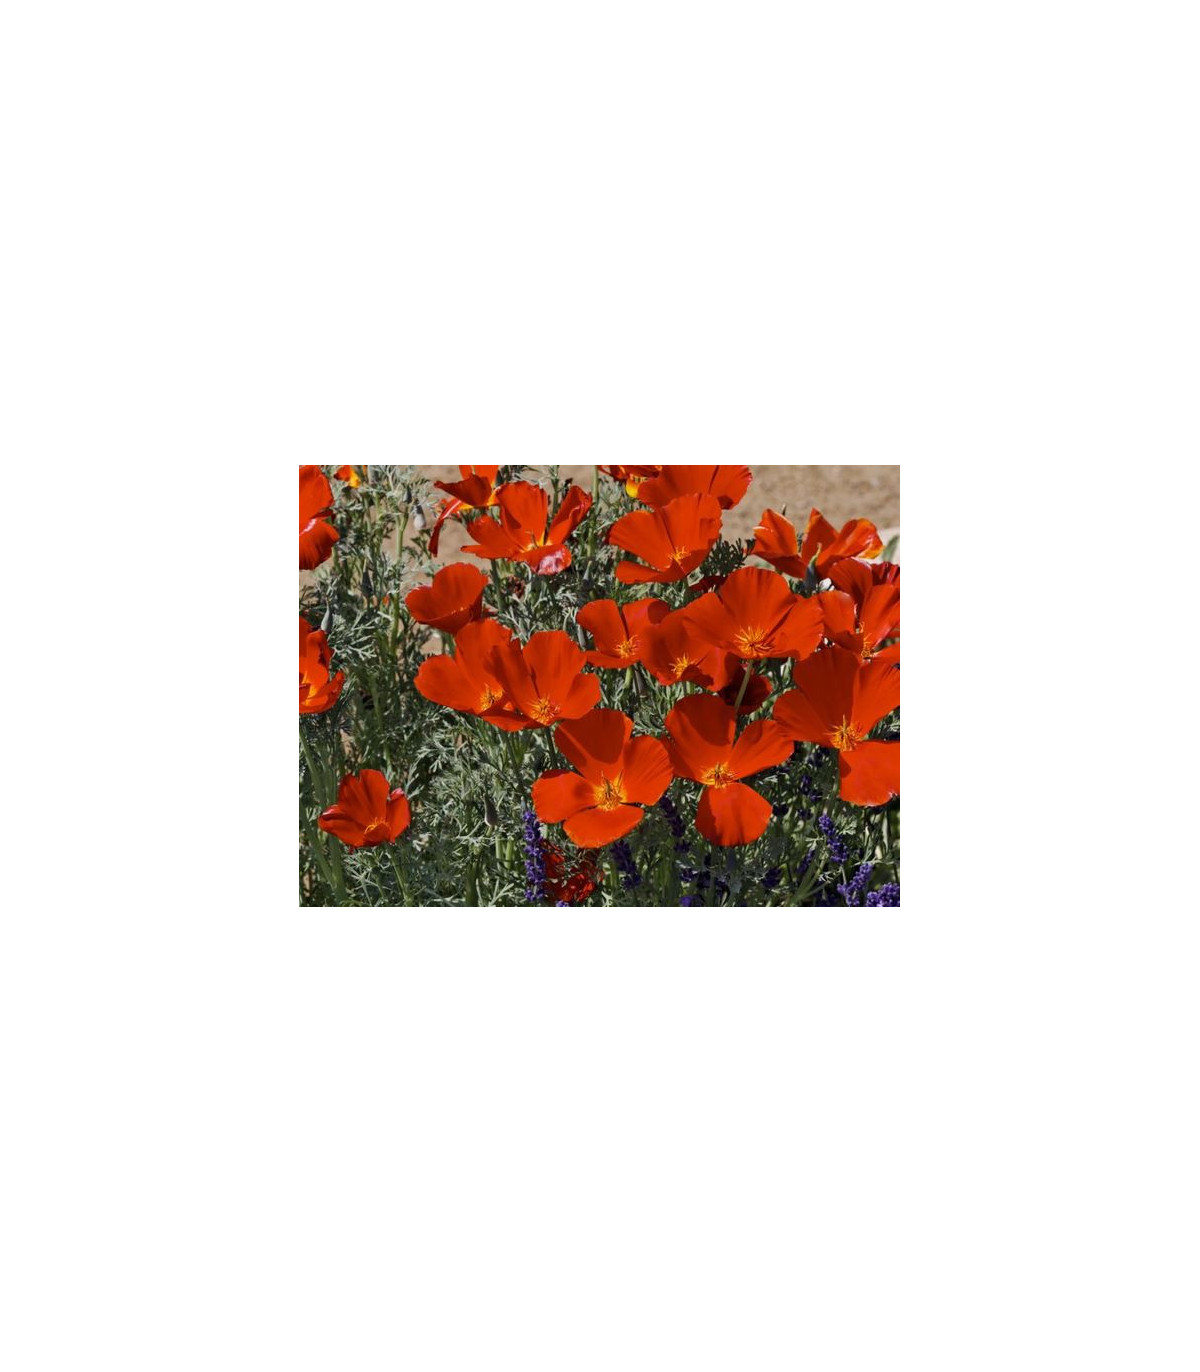 Sluncovka kalifornská červená - Eschscholzia californica - osivo sluncovky - 450 ks